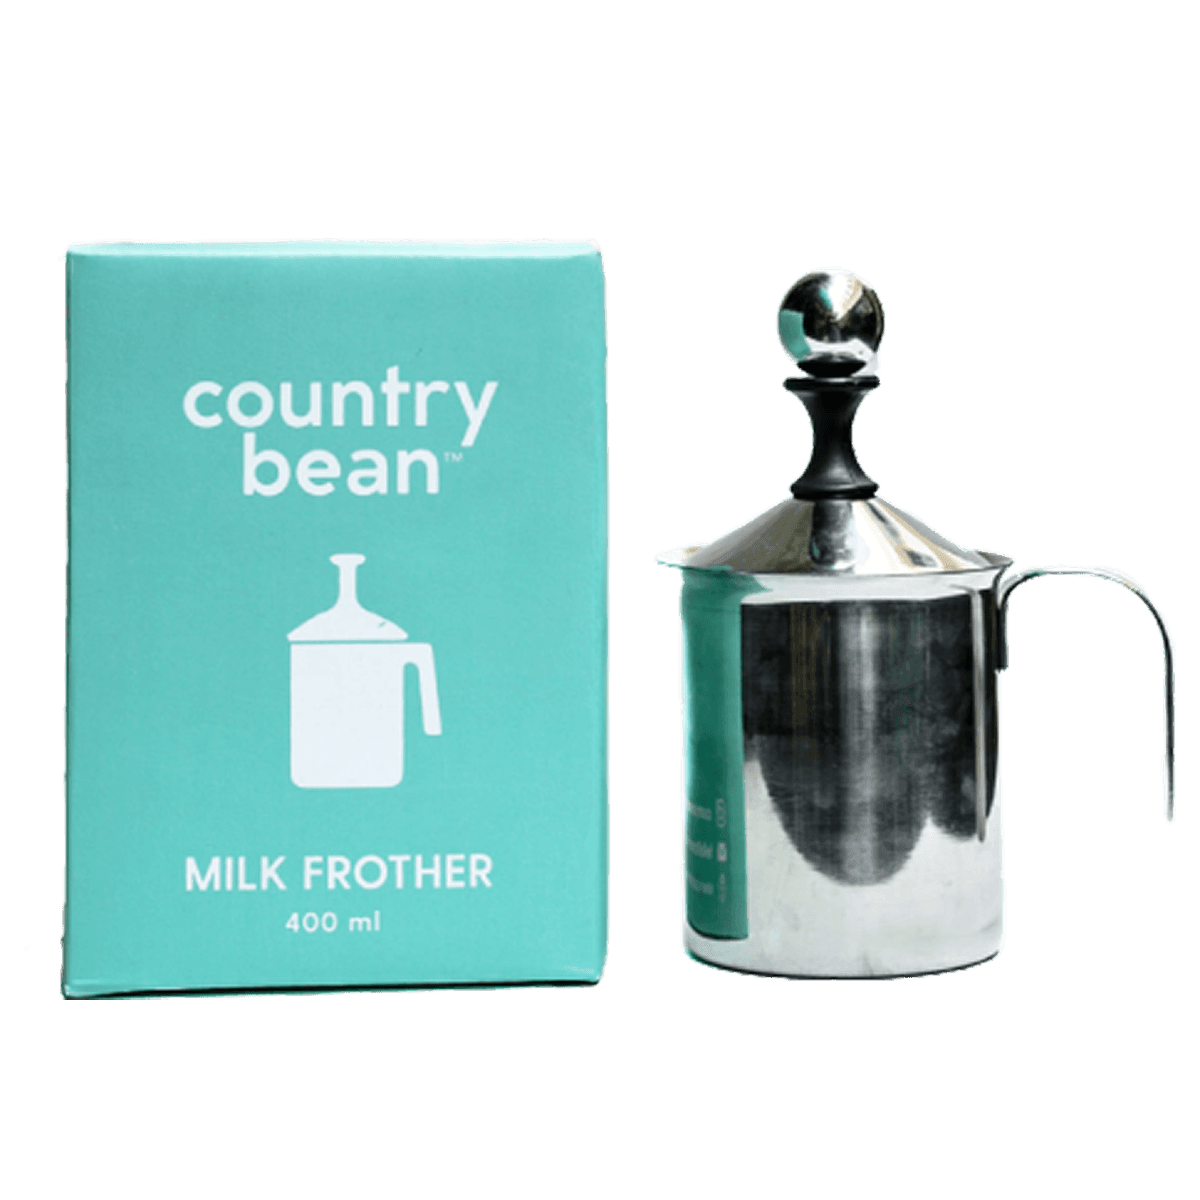 Award-winning Milk Frother